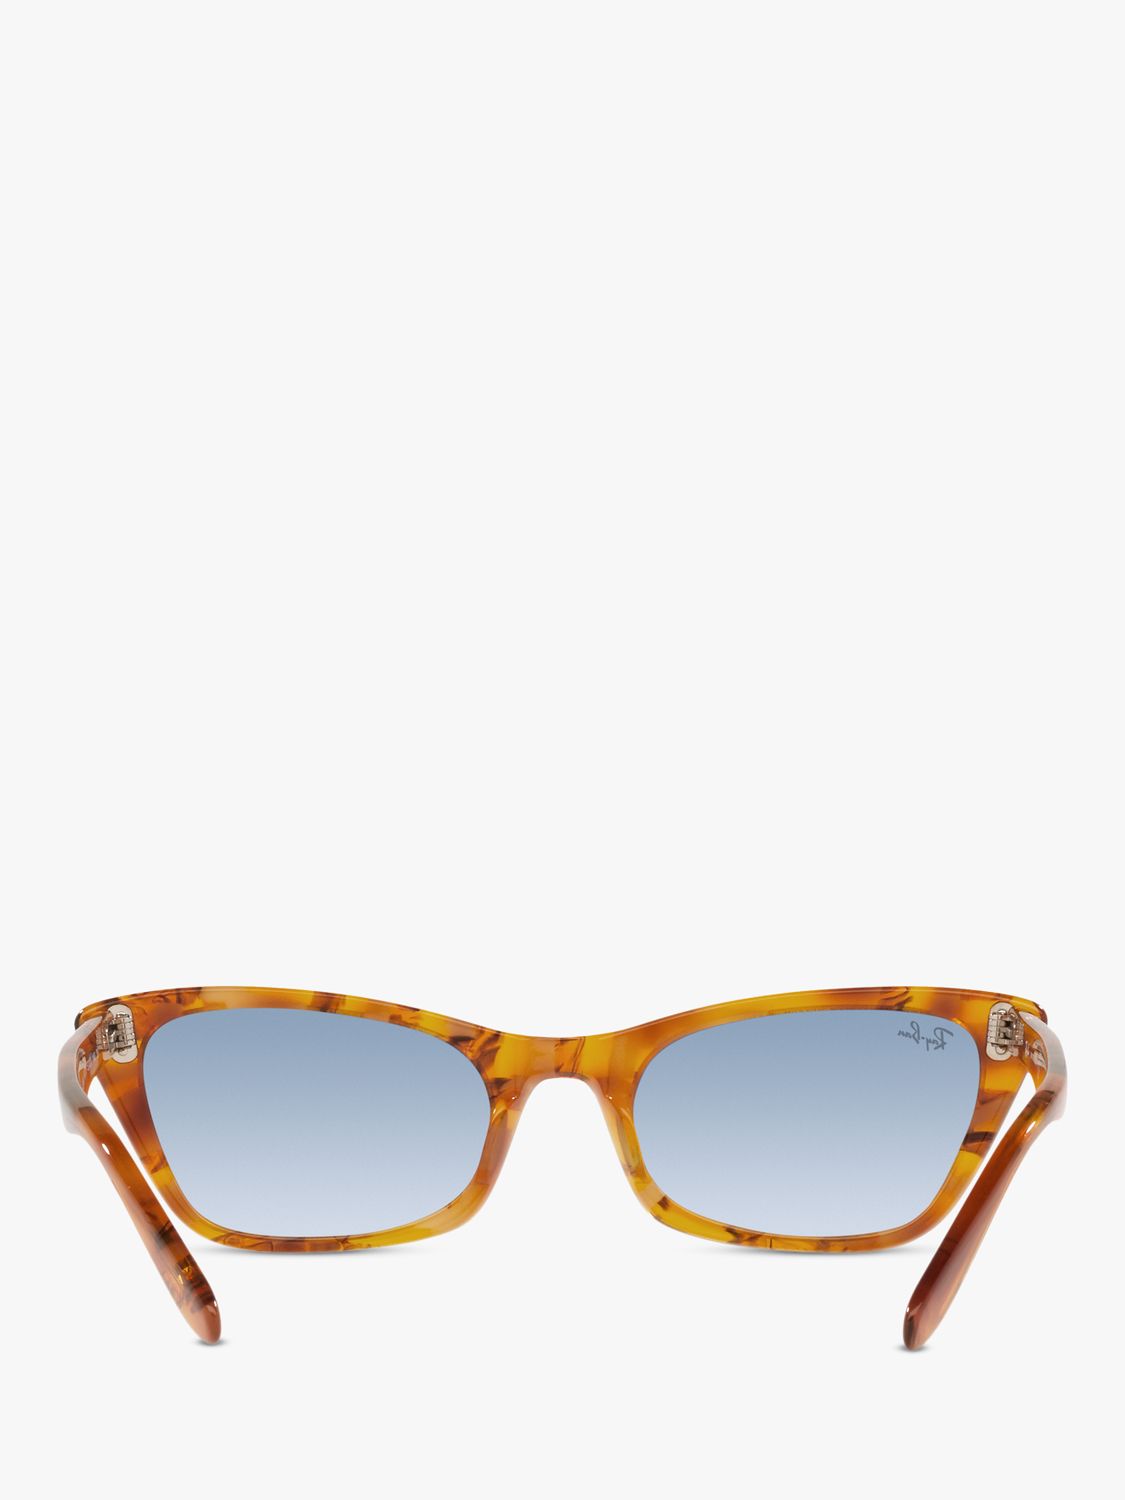 Ray-Ban RB2299 Women's Lady Burbank Cat's Eye Sunglasses, Amber Tortoise/Blue Gradient